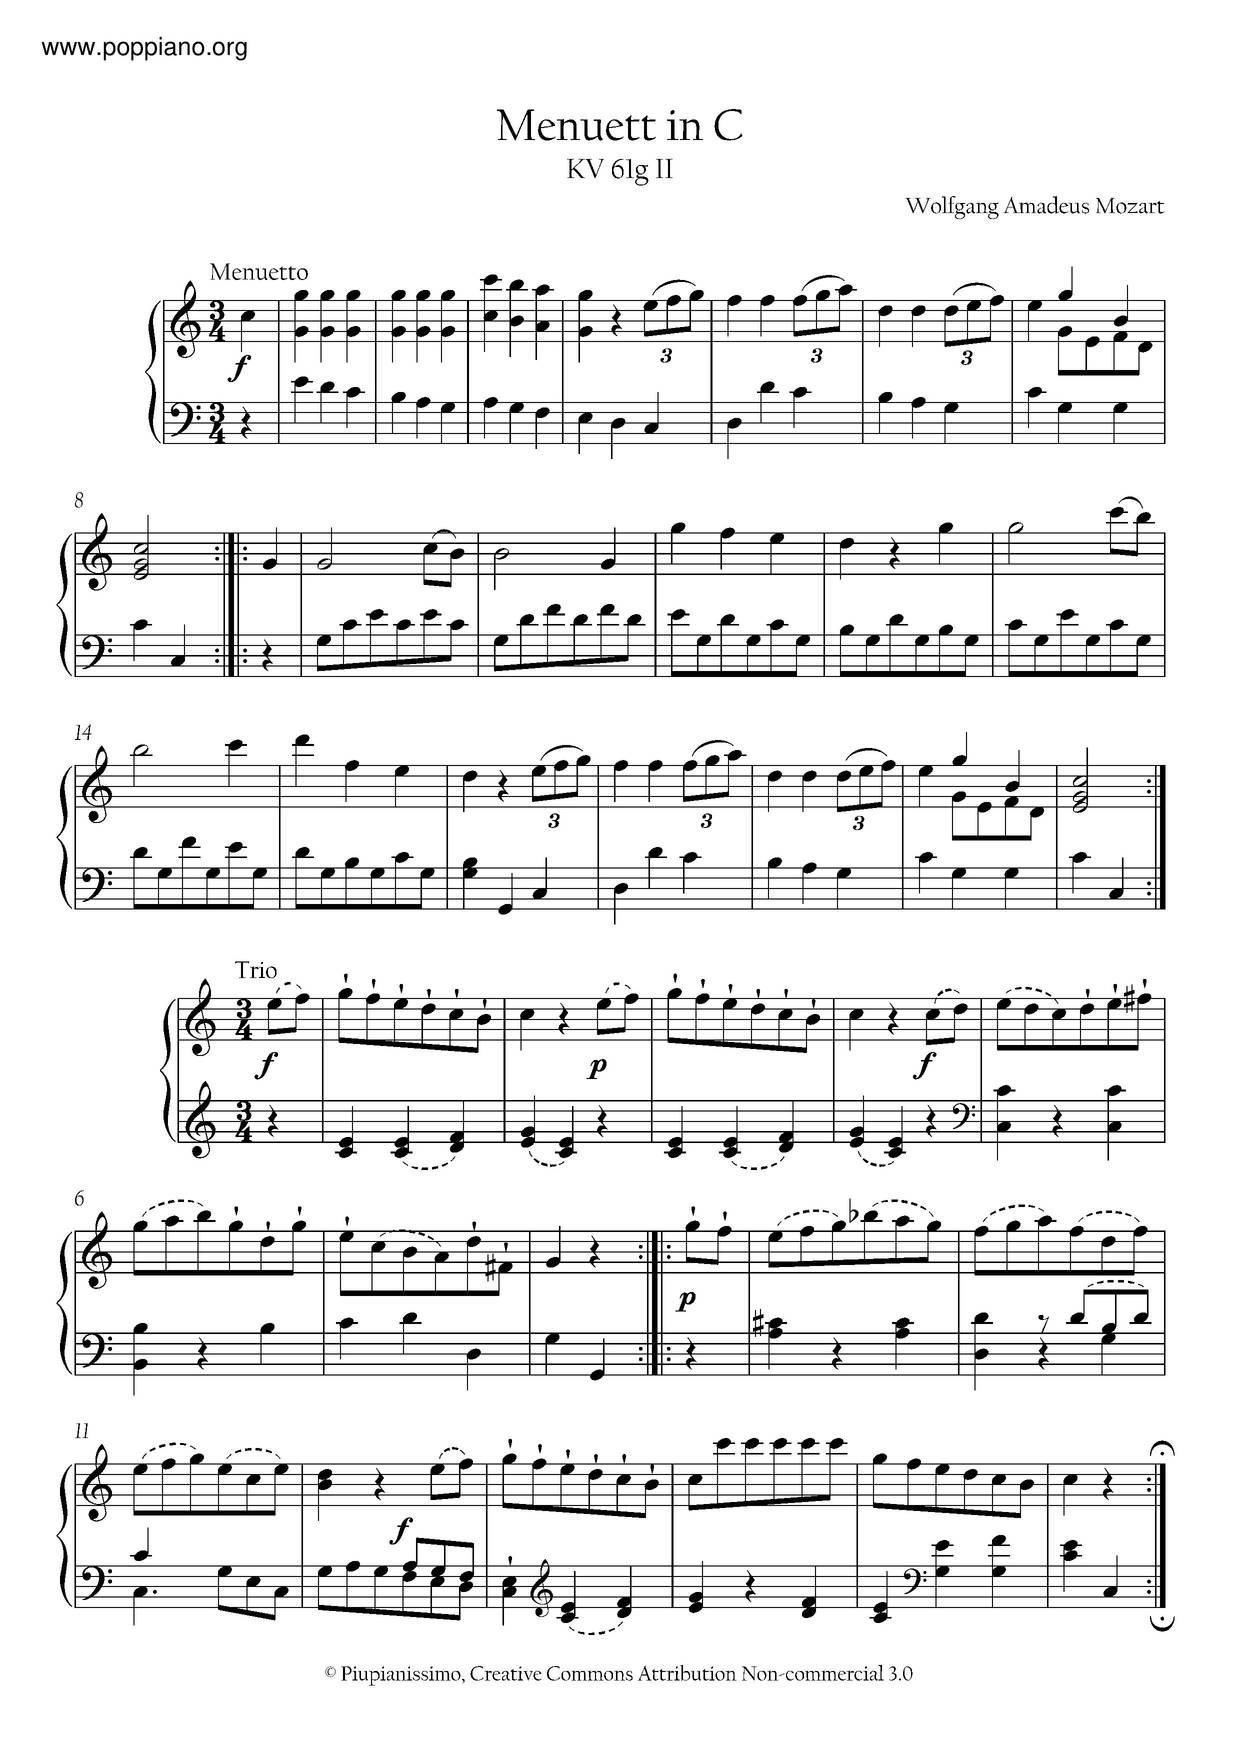 2 Minuets, K. 61Gピアノ譜